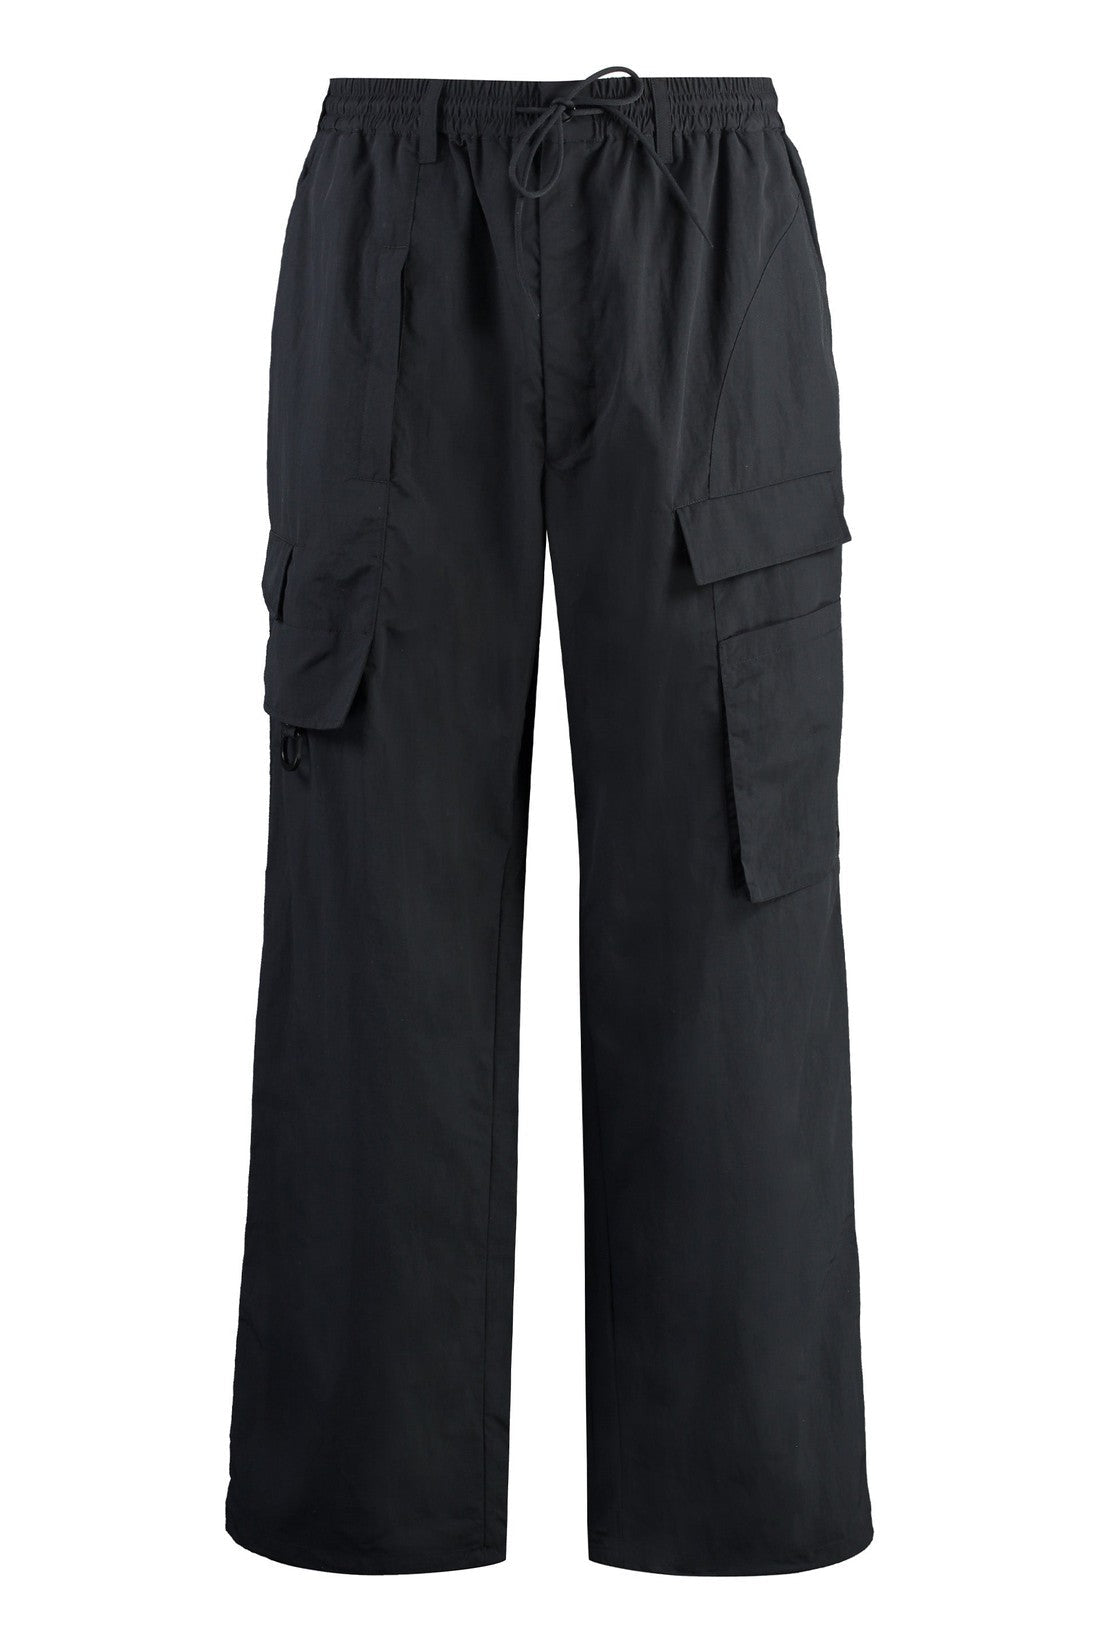 adidas Y-3-OUTLET-SALE-Technical fabric pants-ARCHIVIST